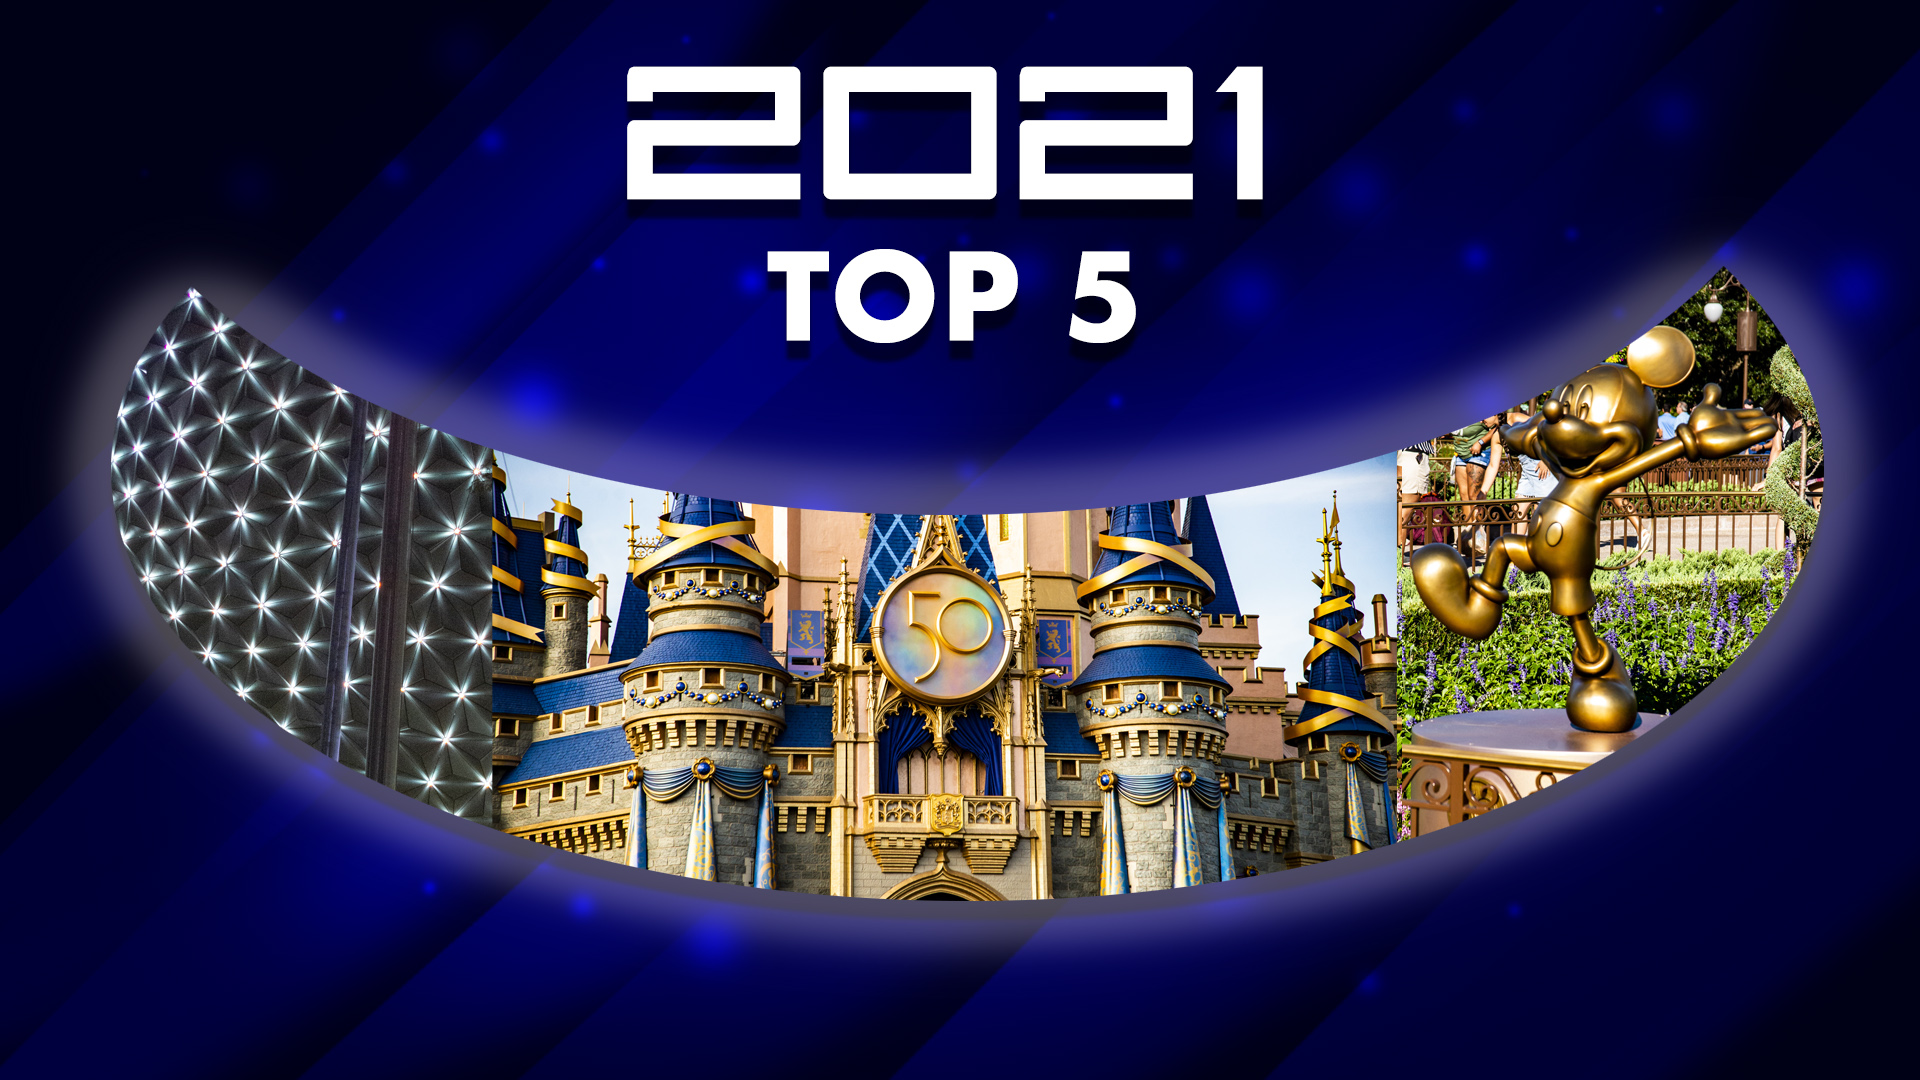 #1 – Walt Disney World at 50 – Top 5 Good News Disney Stories of 2021